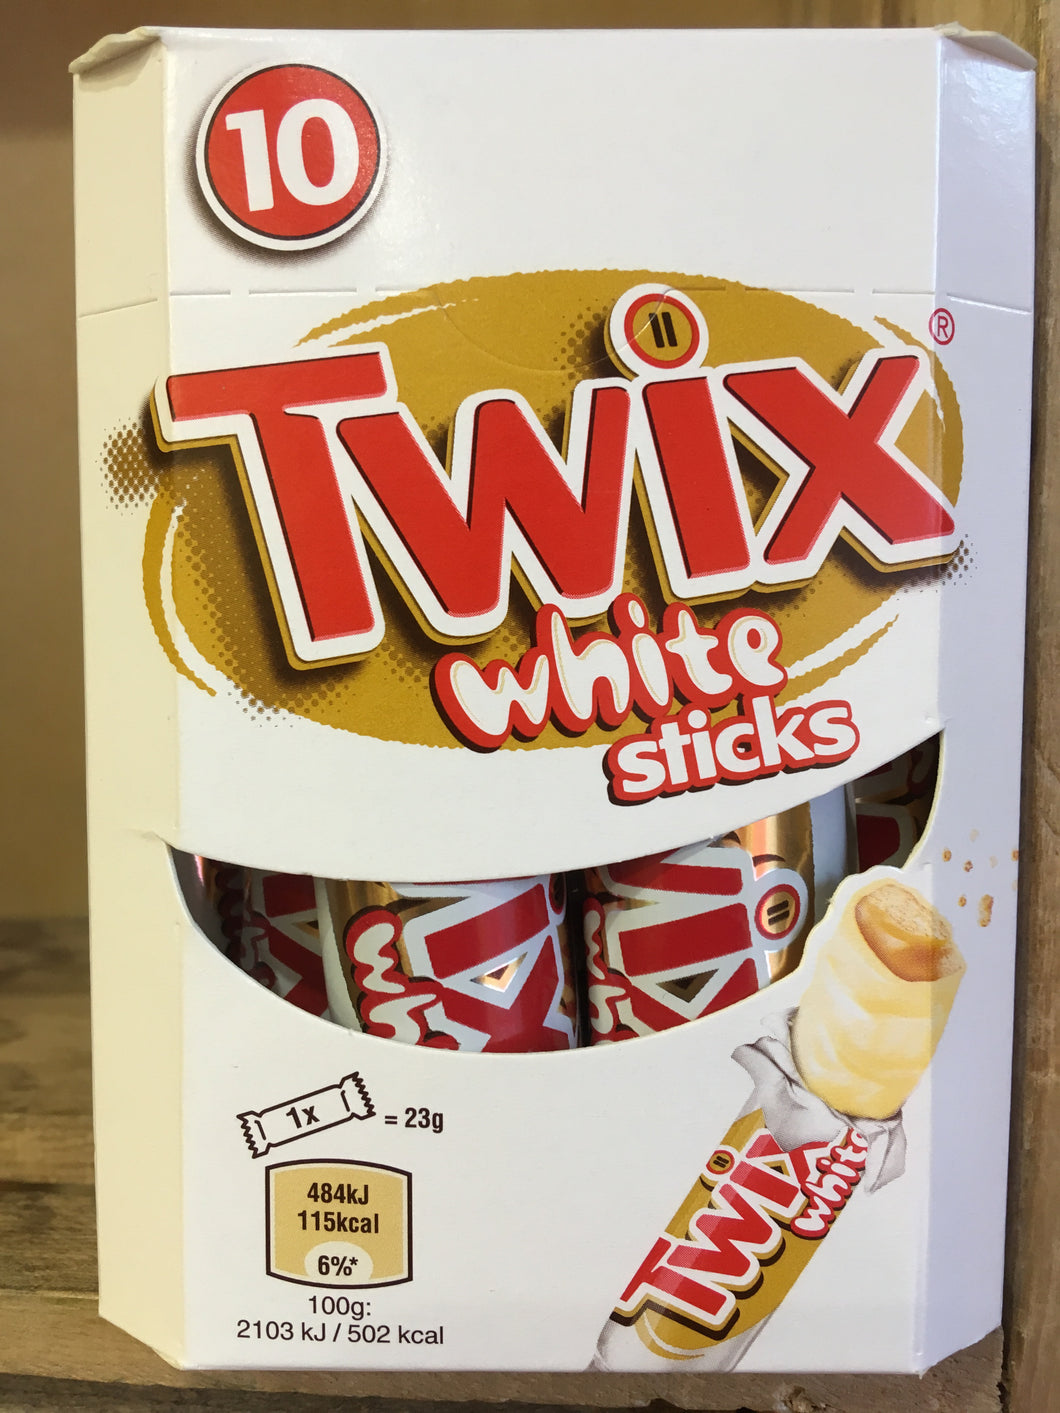 10x Twix White Sticks Limited Edition 230g (10x23g)